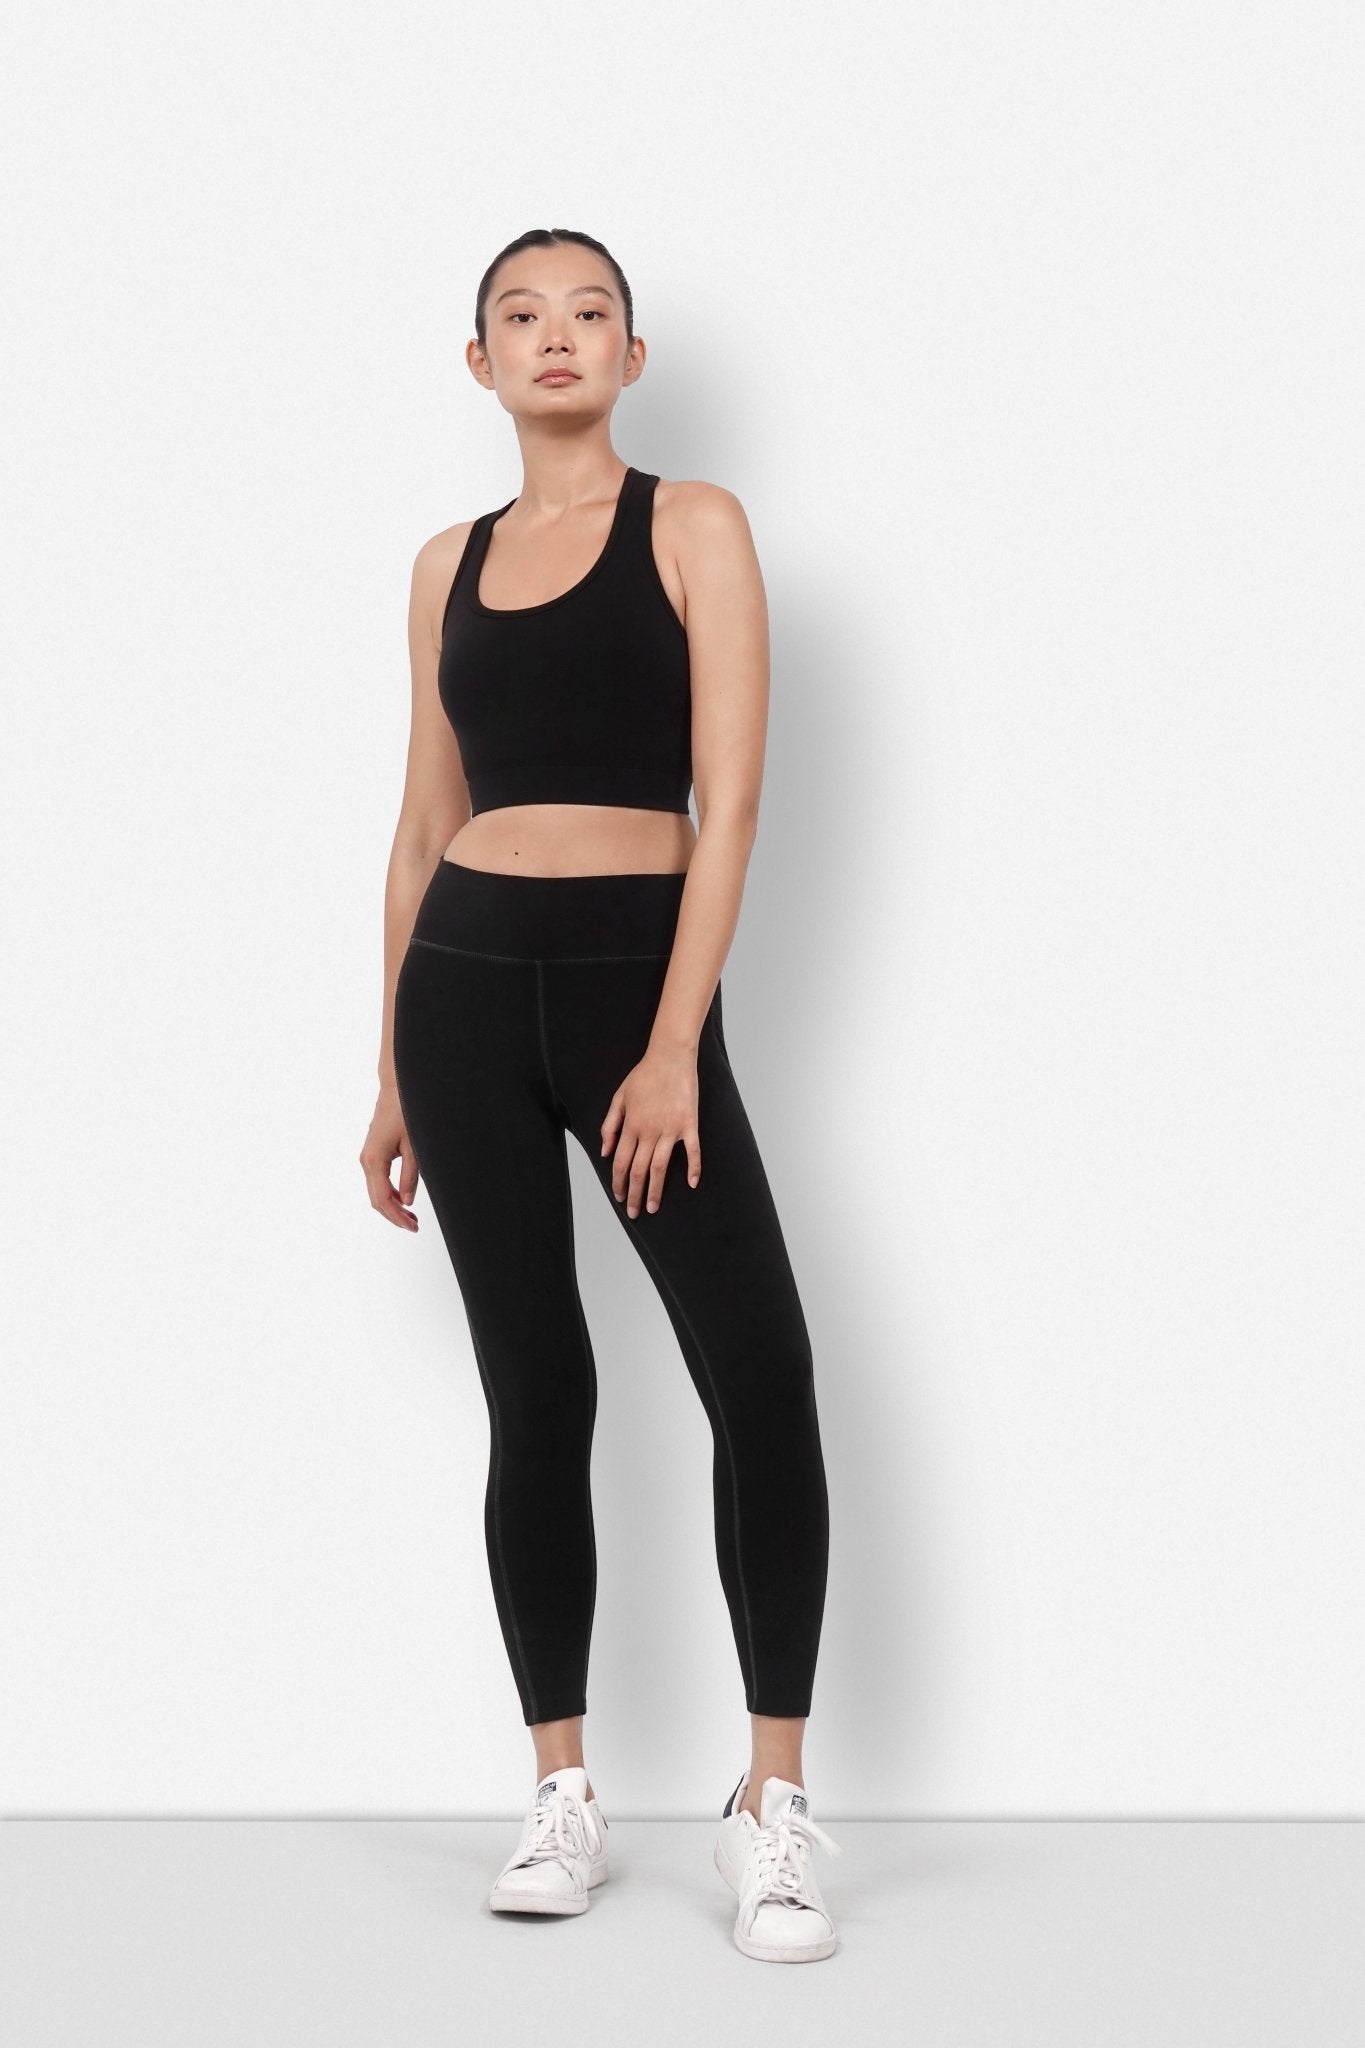 Victoria's Secret PINK - $25 Cotton Yoga Pant in stores now